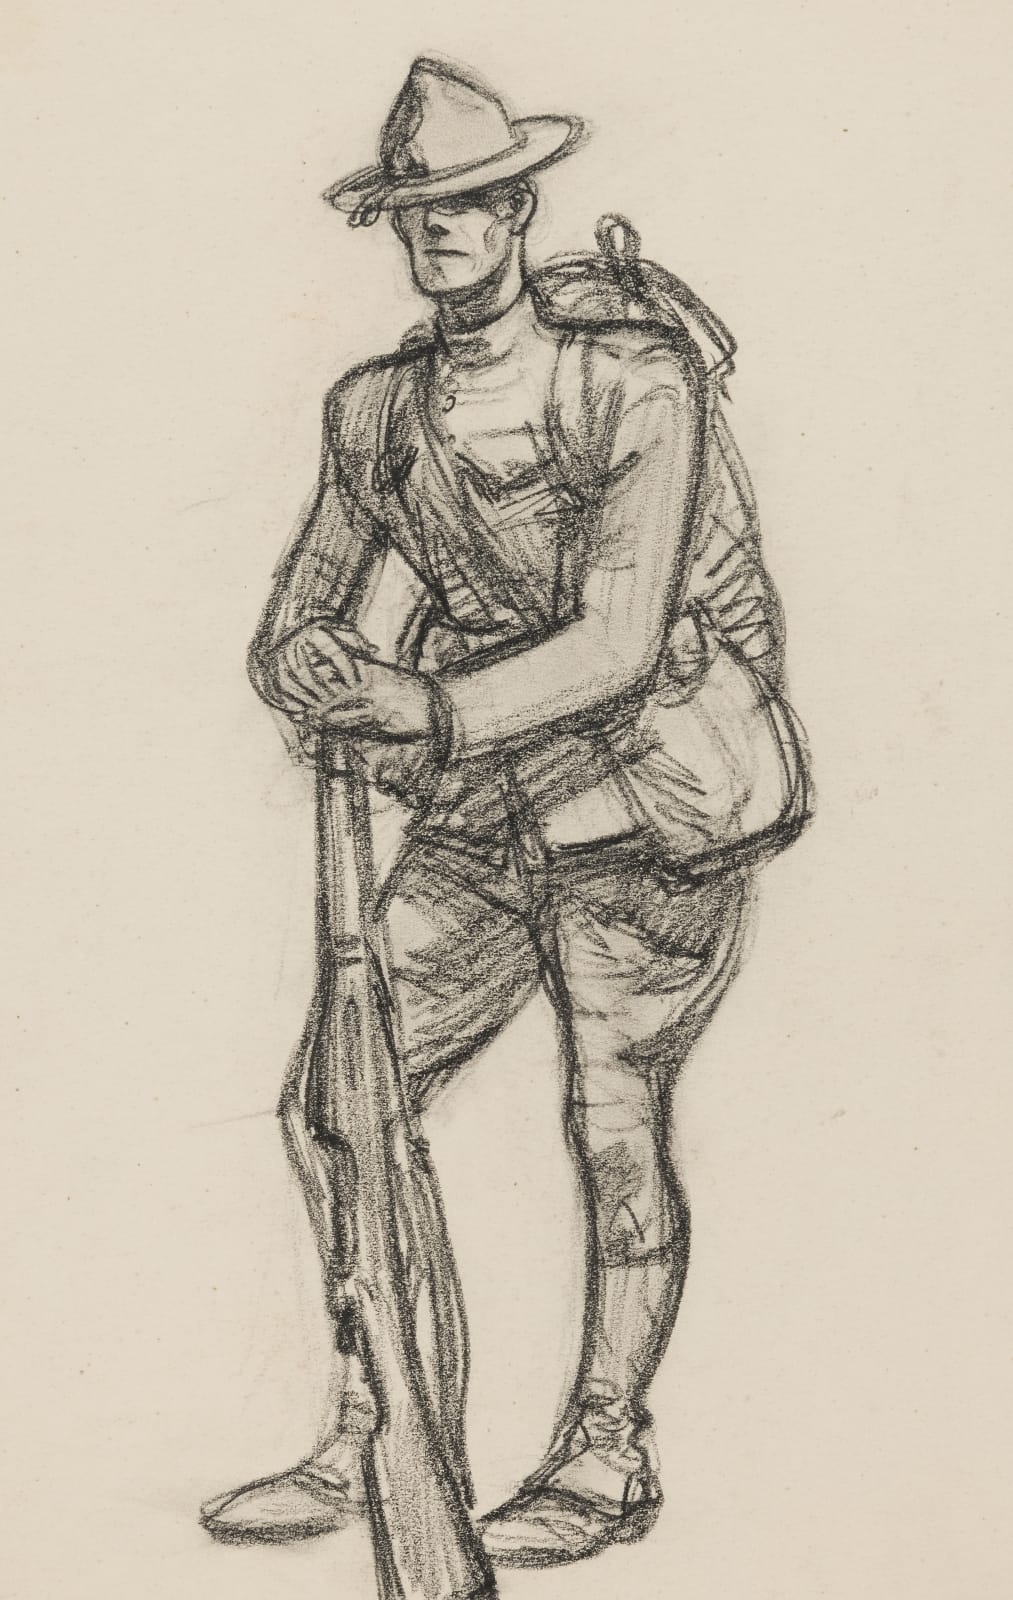 Edward Hopper, Drawing for "The Yank", 1915-1918